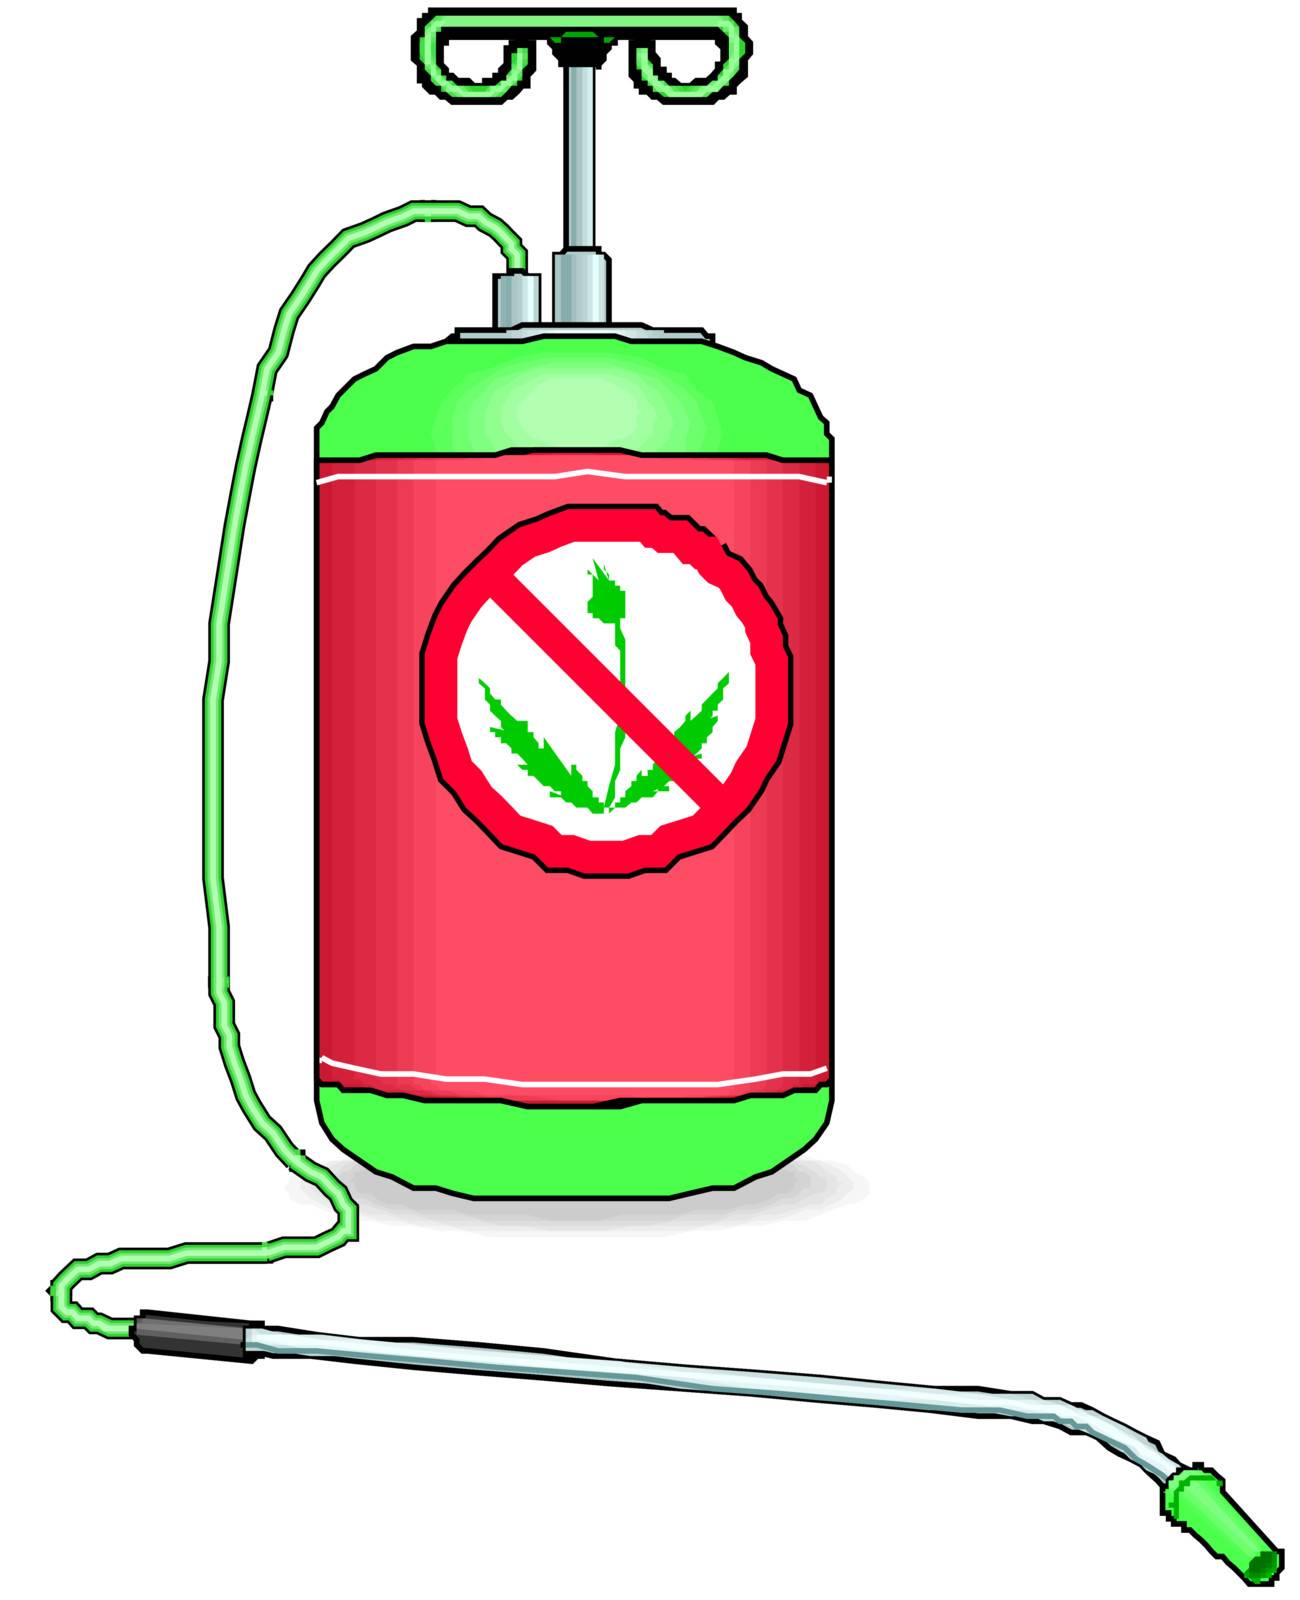 Extinguisher by yurka